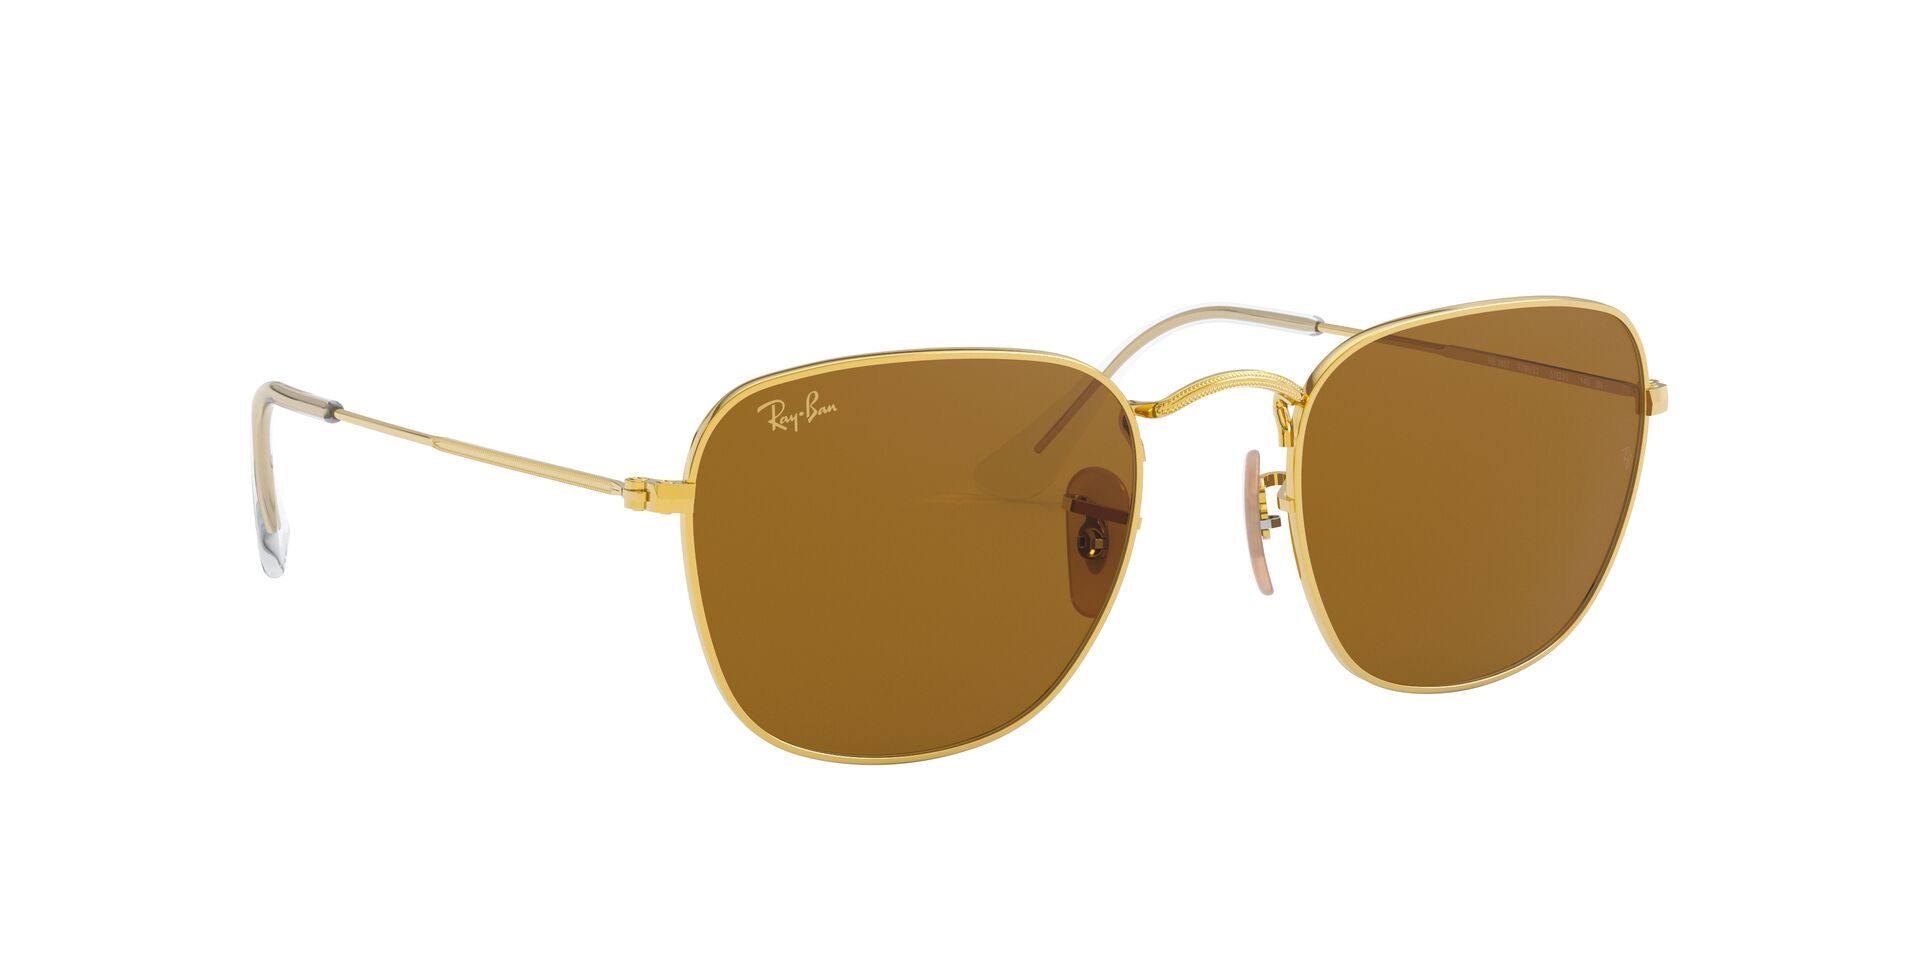 Buy Ray-Ban Frank Legend Sunglasses Online.